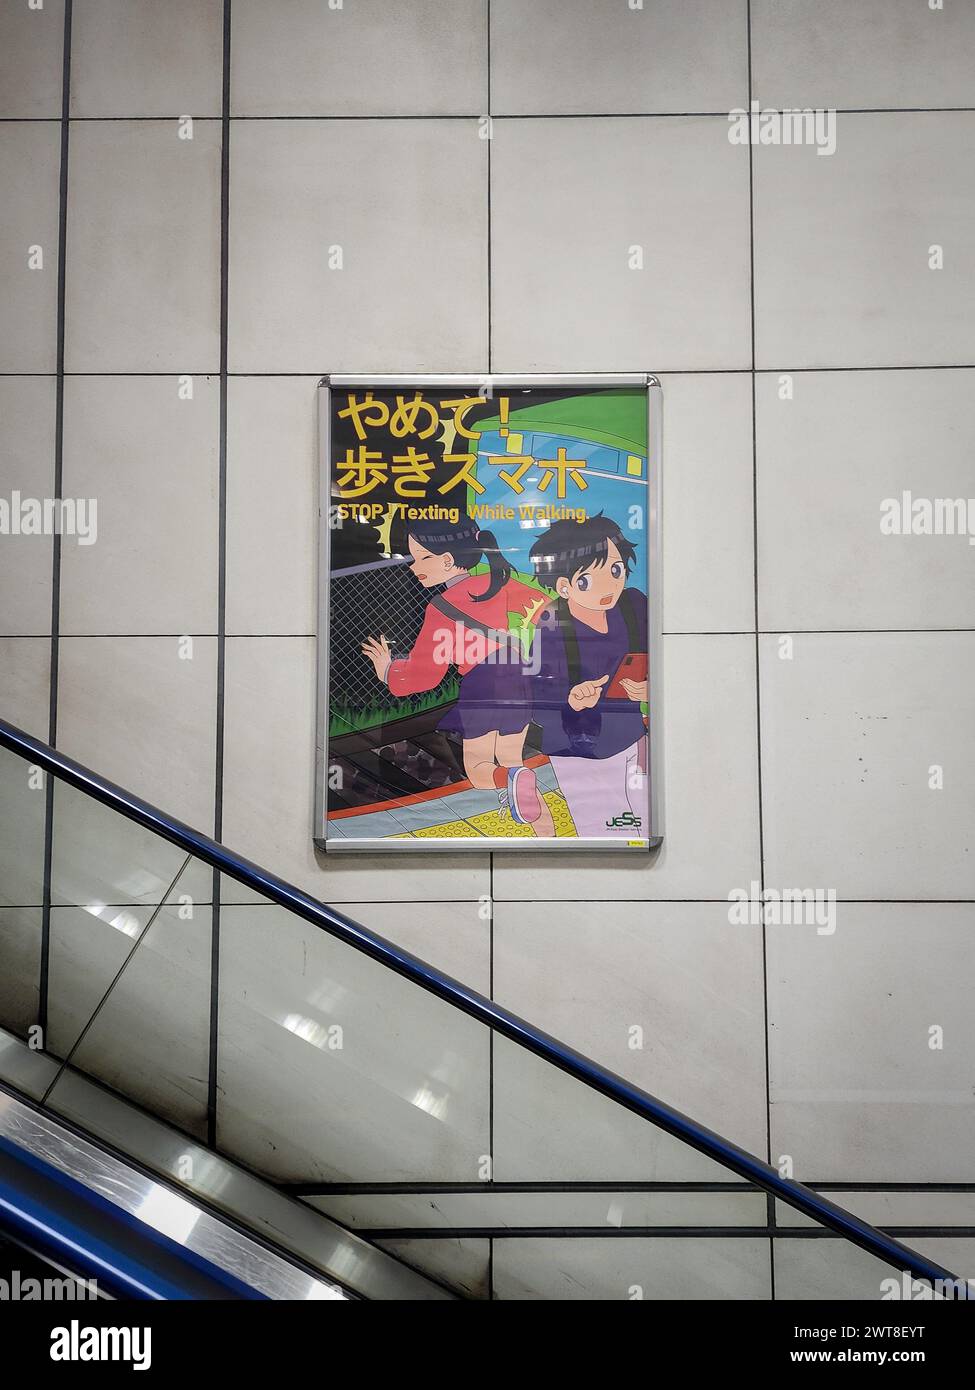 Tokyo, Japan - Tokyo Subway Poster: 'Stop Texting While Walking' Stock Photo